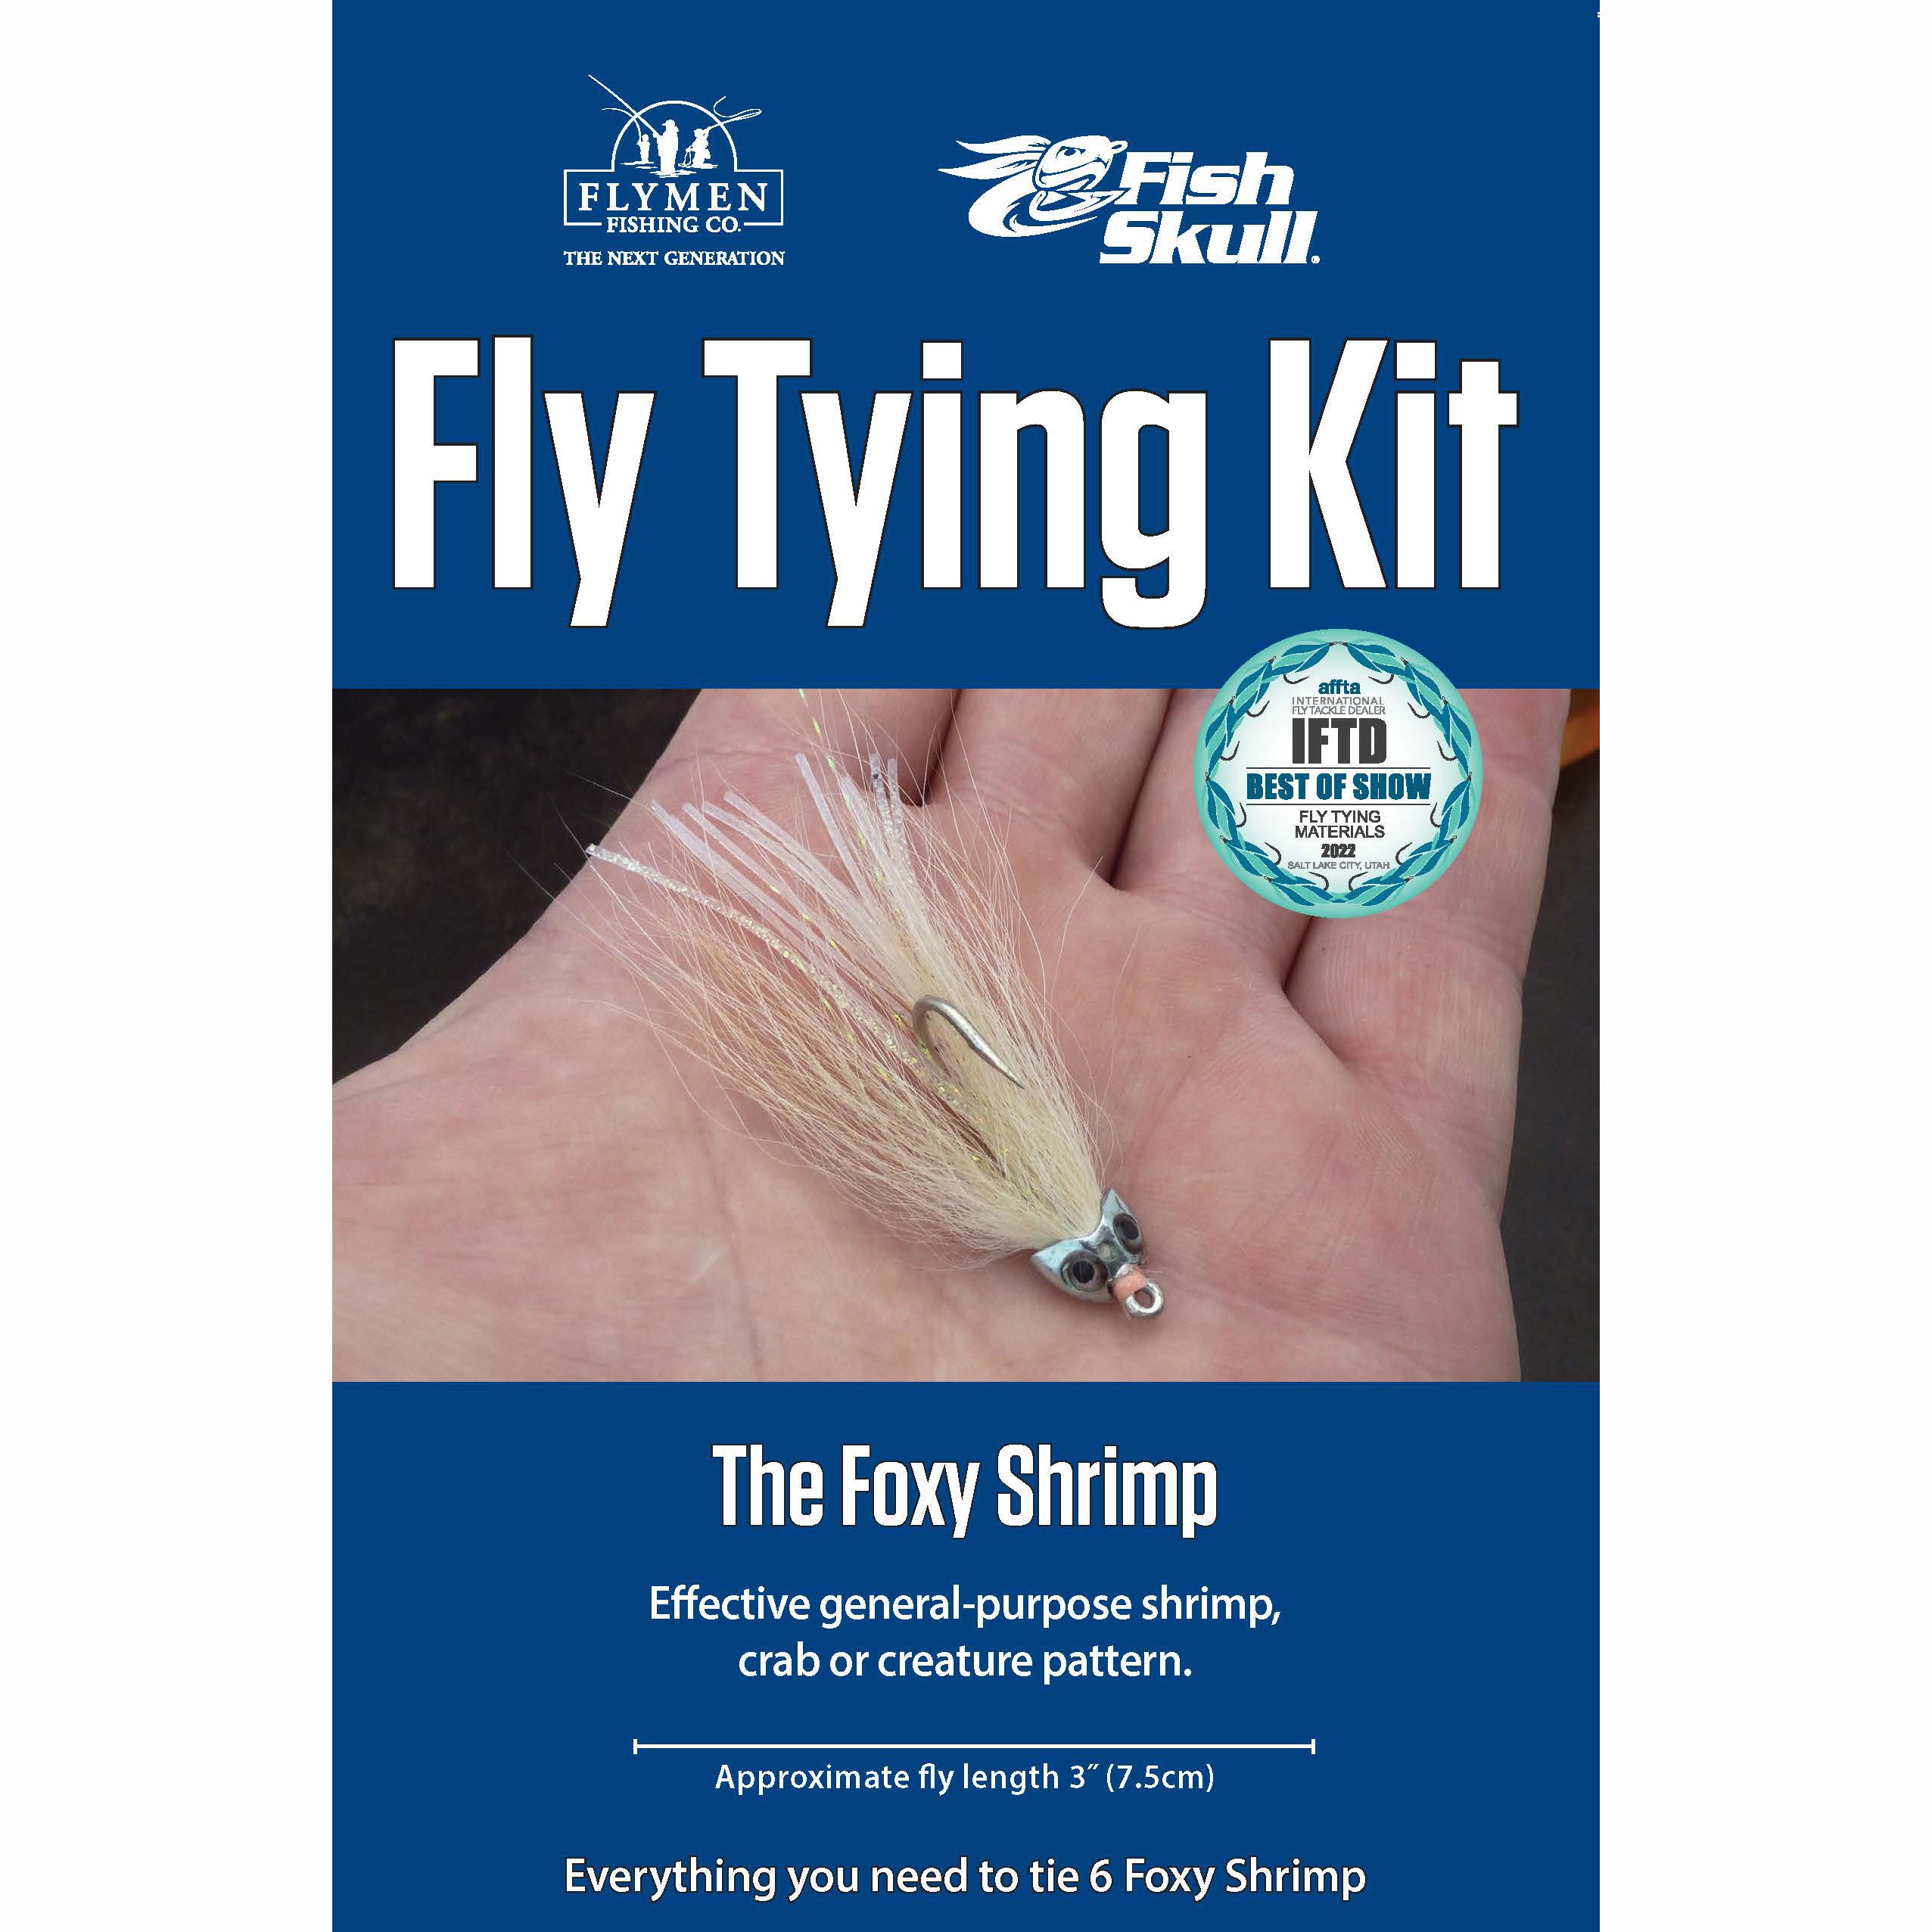 Flymen Fishing Company Shrimp Tail Gotcha Fly-Tying Kit